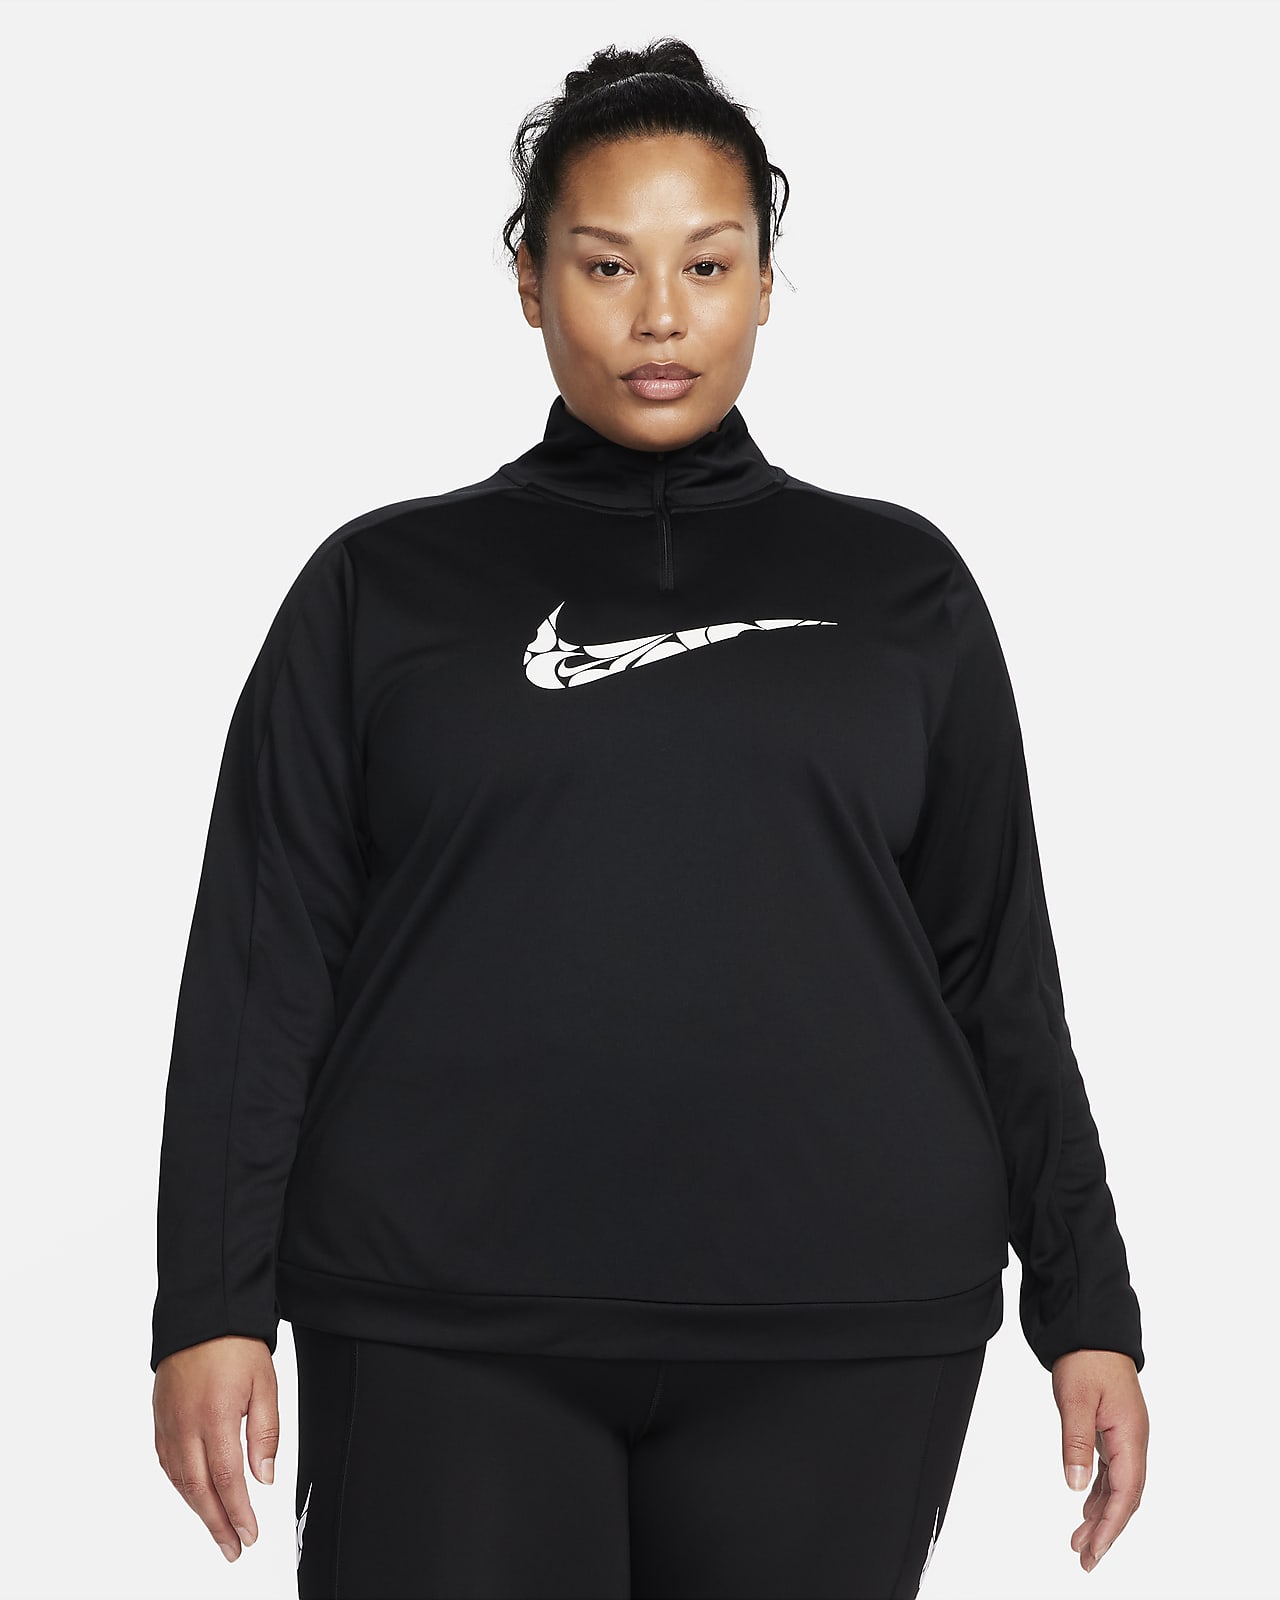 Capo midlayer con zip a 1/4 Dri-FIT Nike Swoosh (Plus size) – Donna